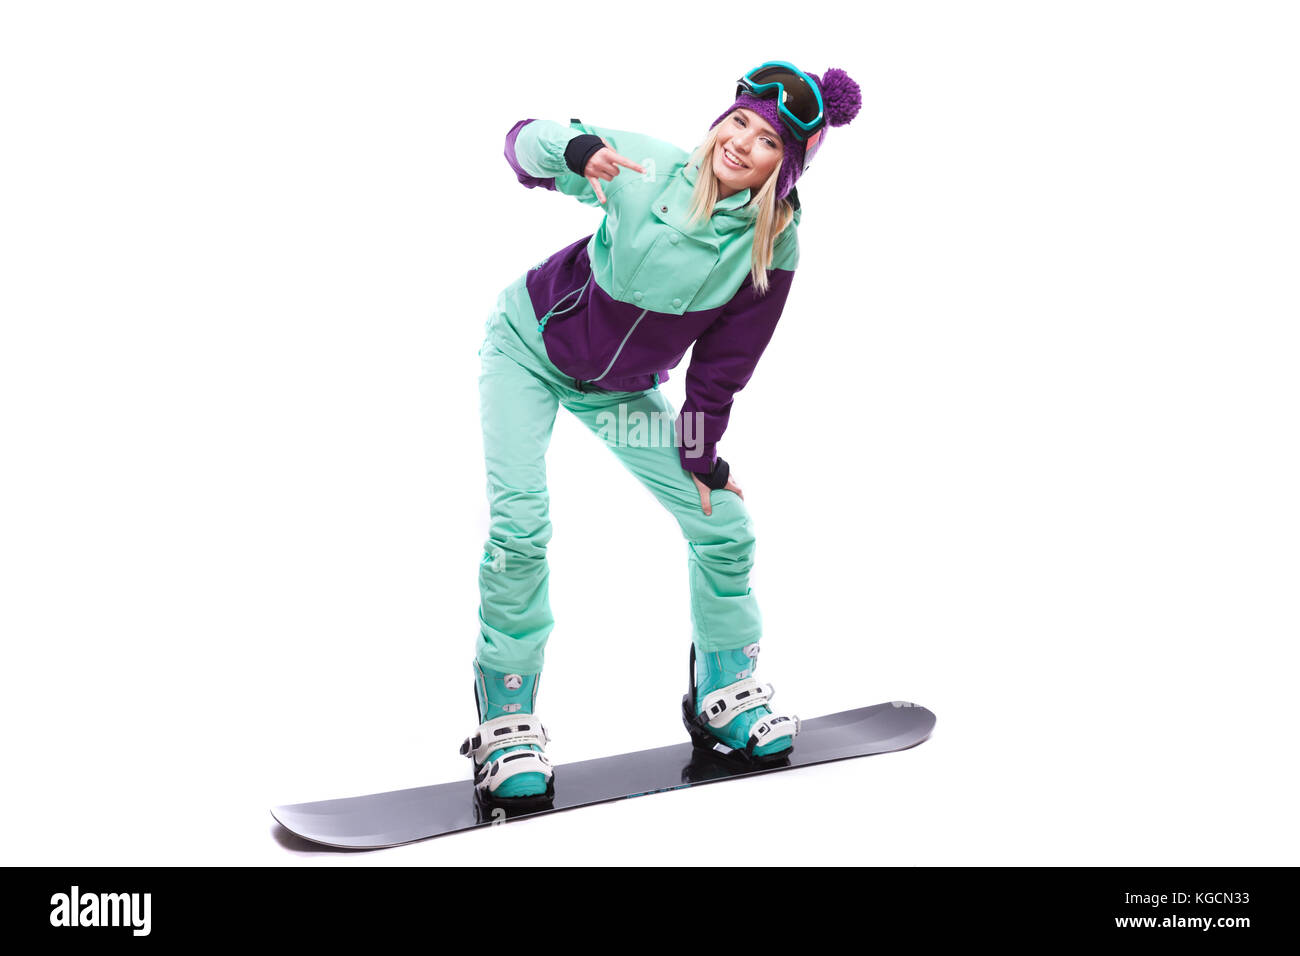 Jolie jeune femme en costume de ski snowboard ride violet Photo Stock -  Alamy